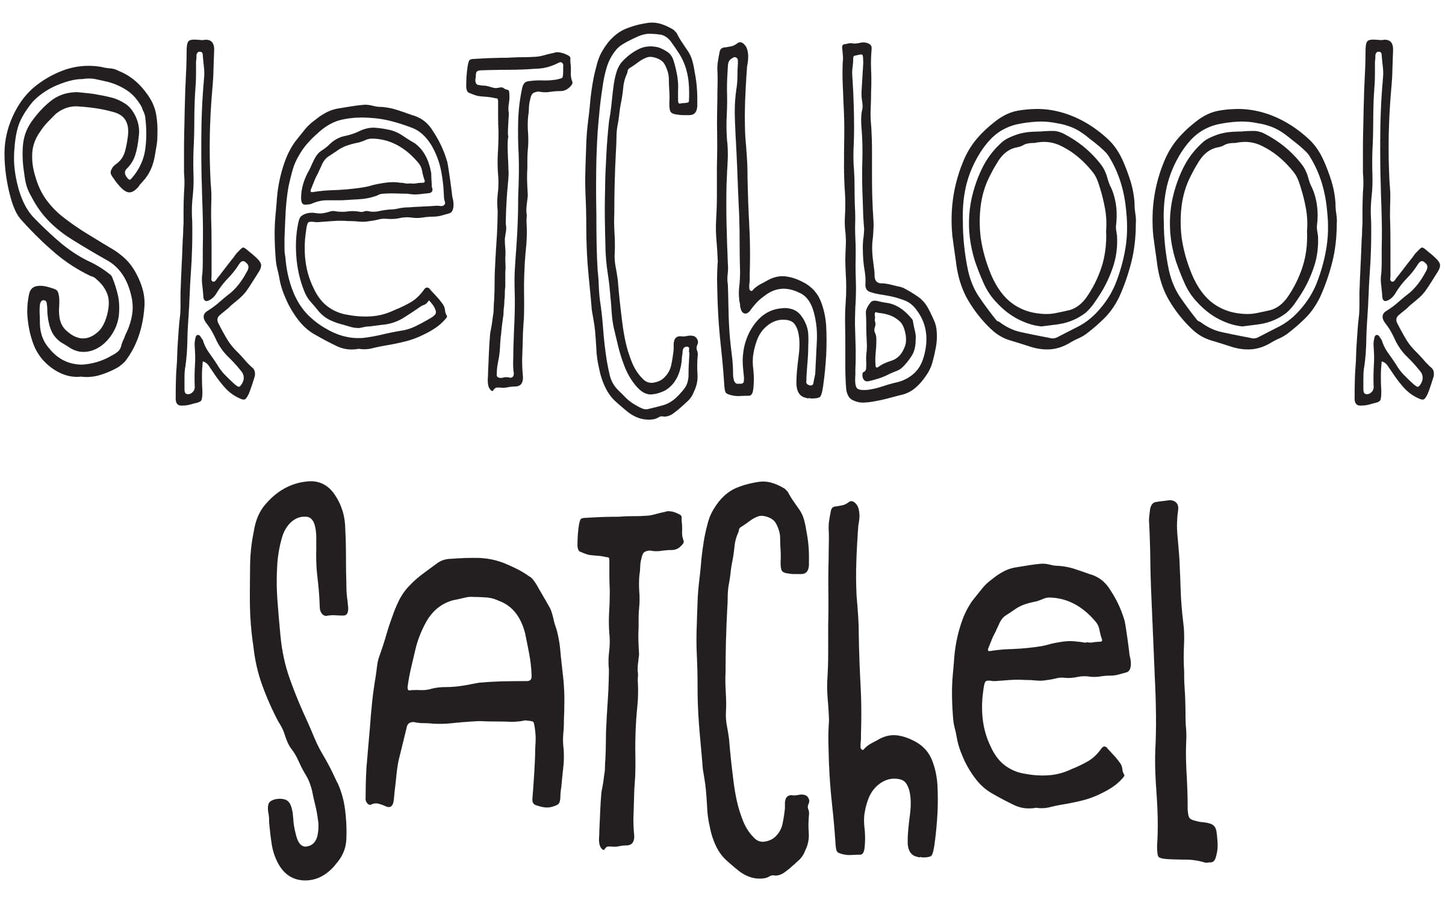 Banora Point | Sketchbook Satchel | Wednesdays